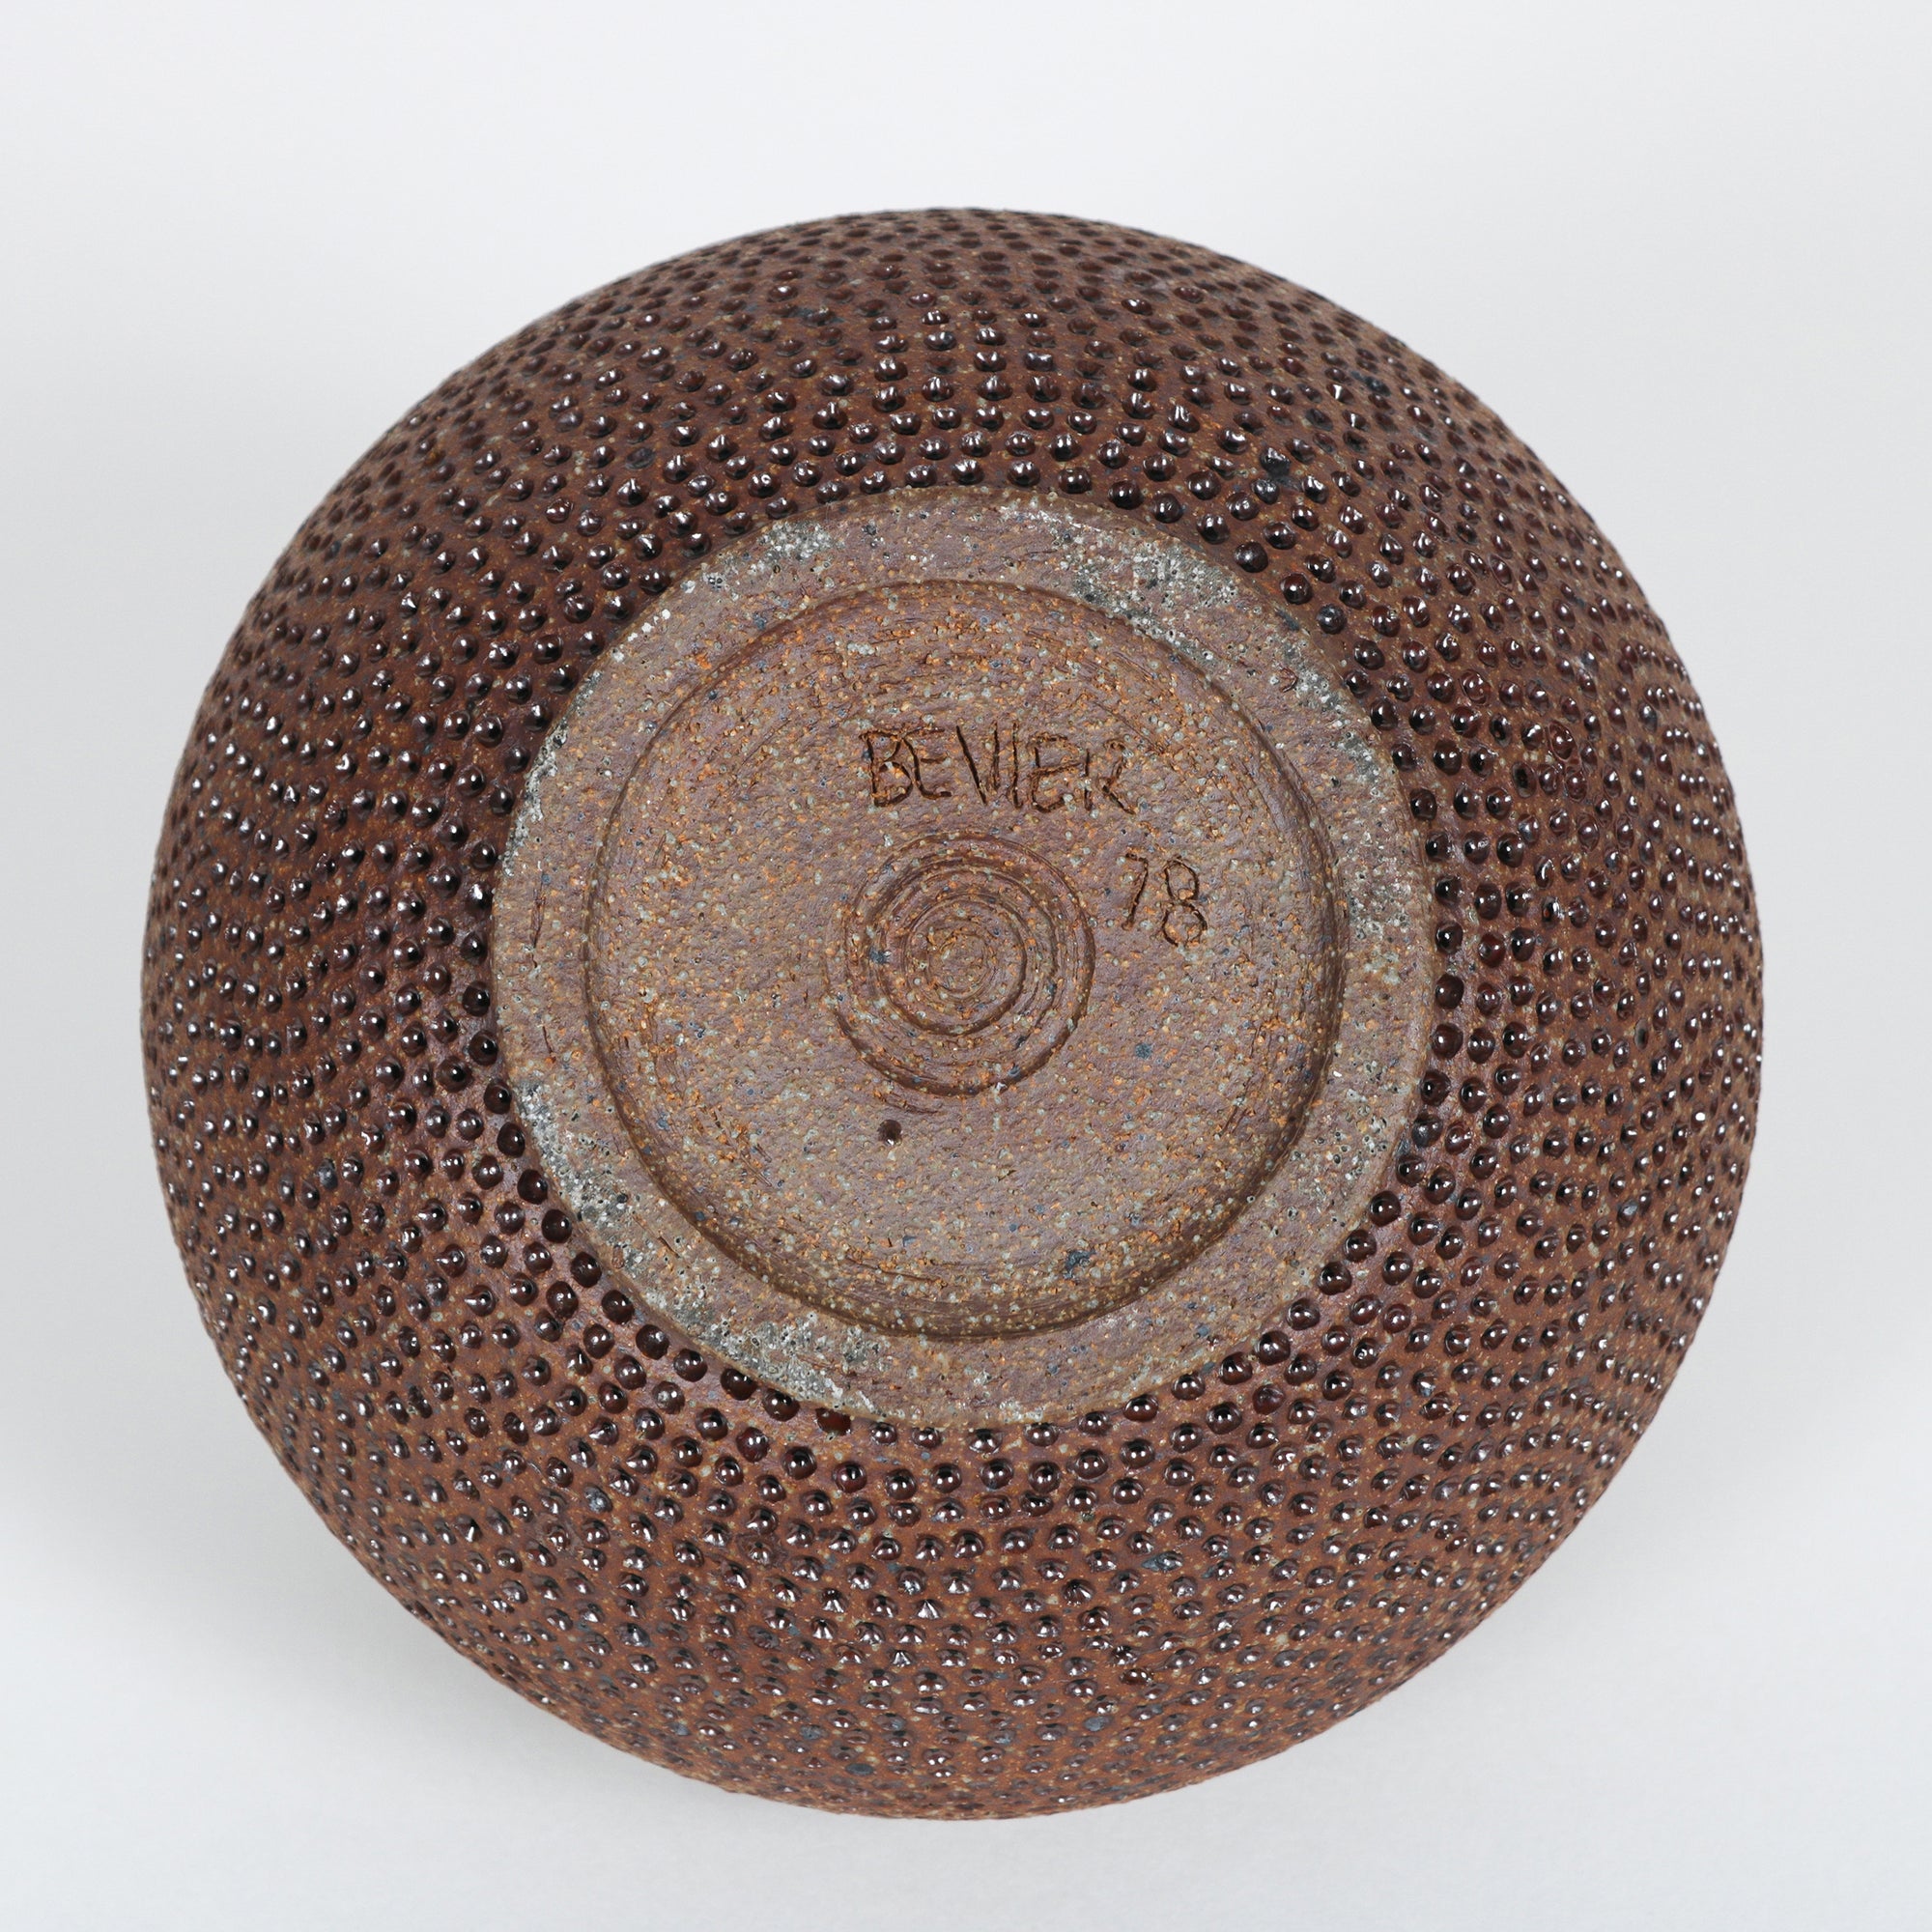 1978 Handmade Ceramic with Dot Pattern <br><br>#B5908